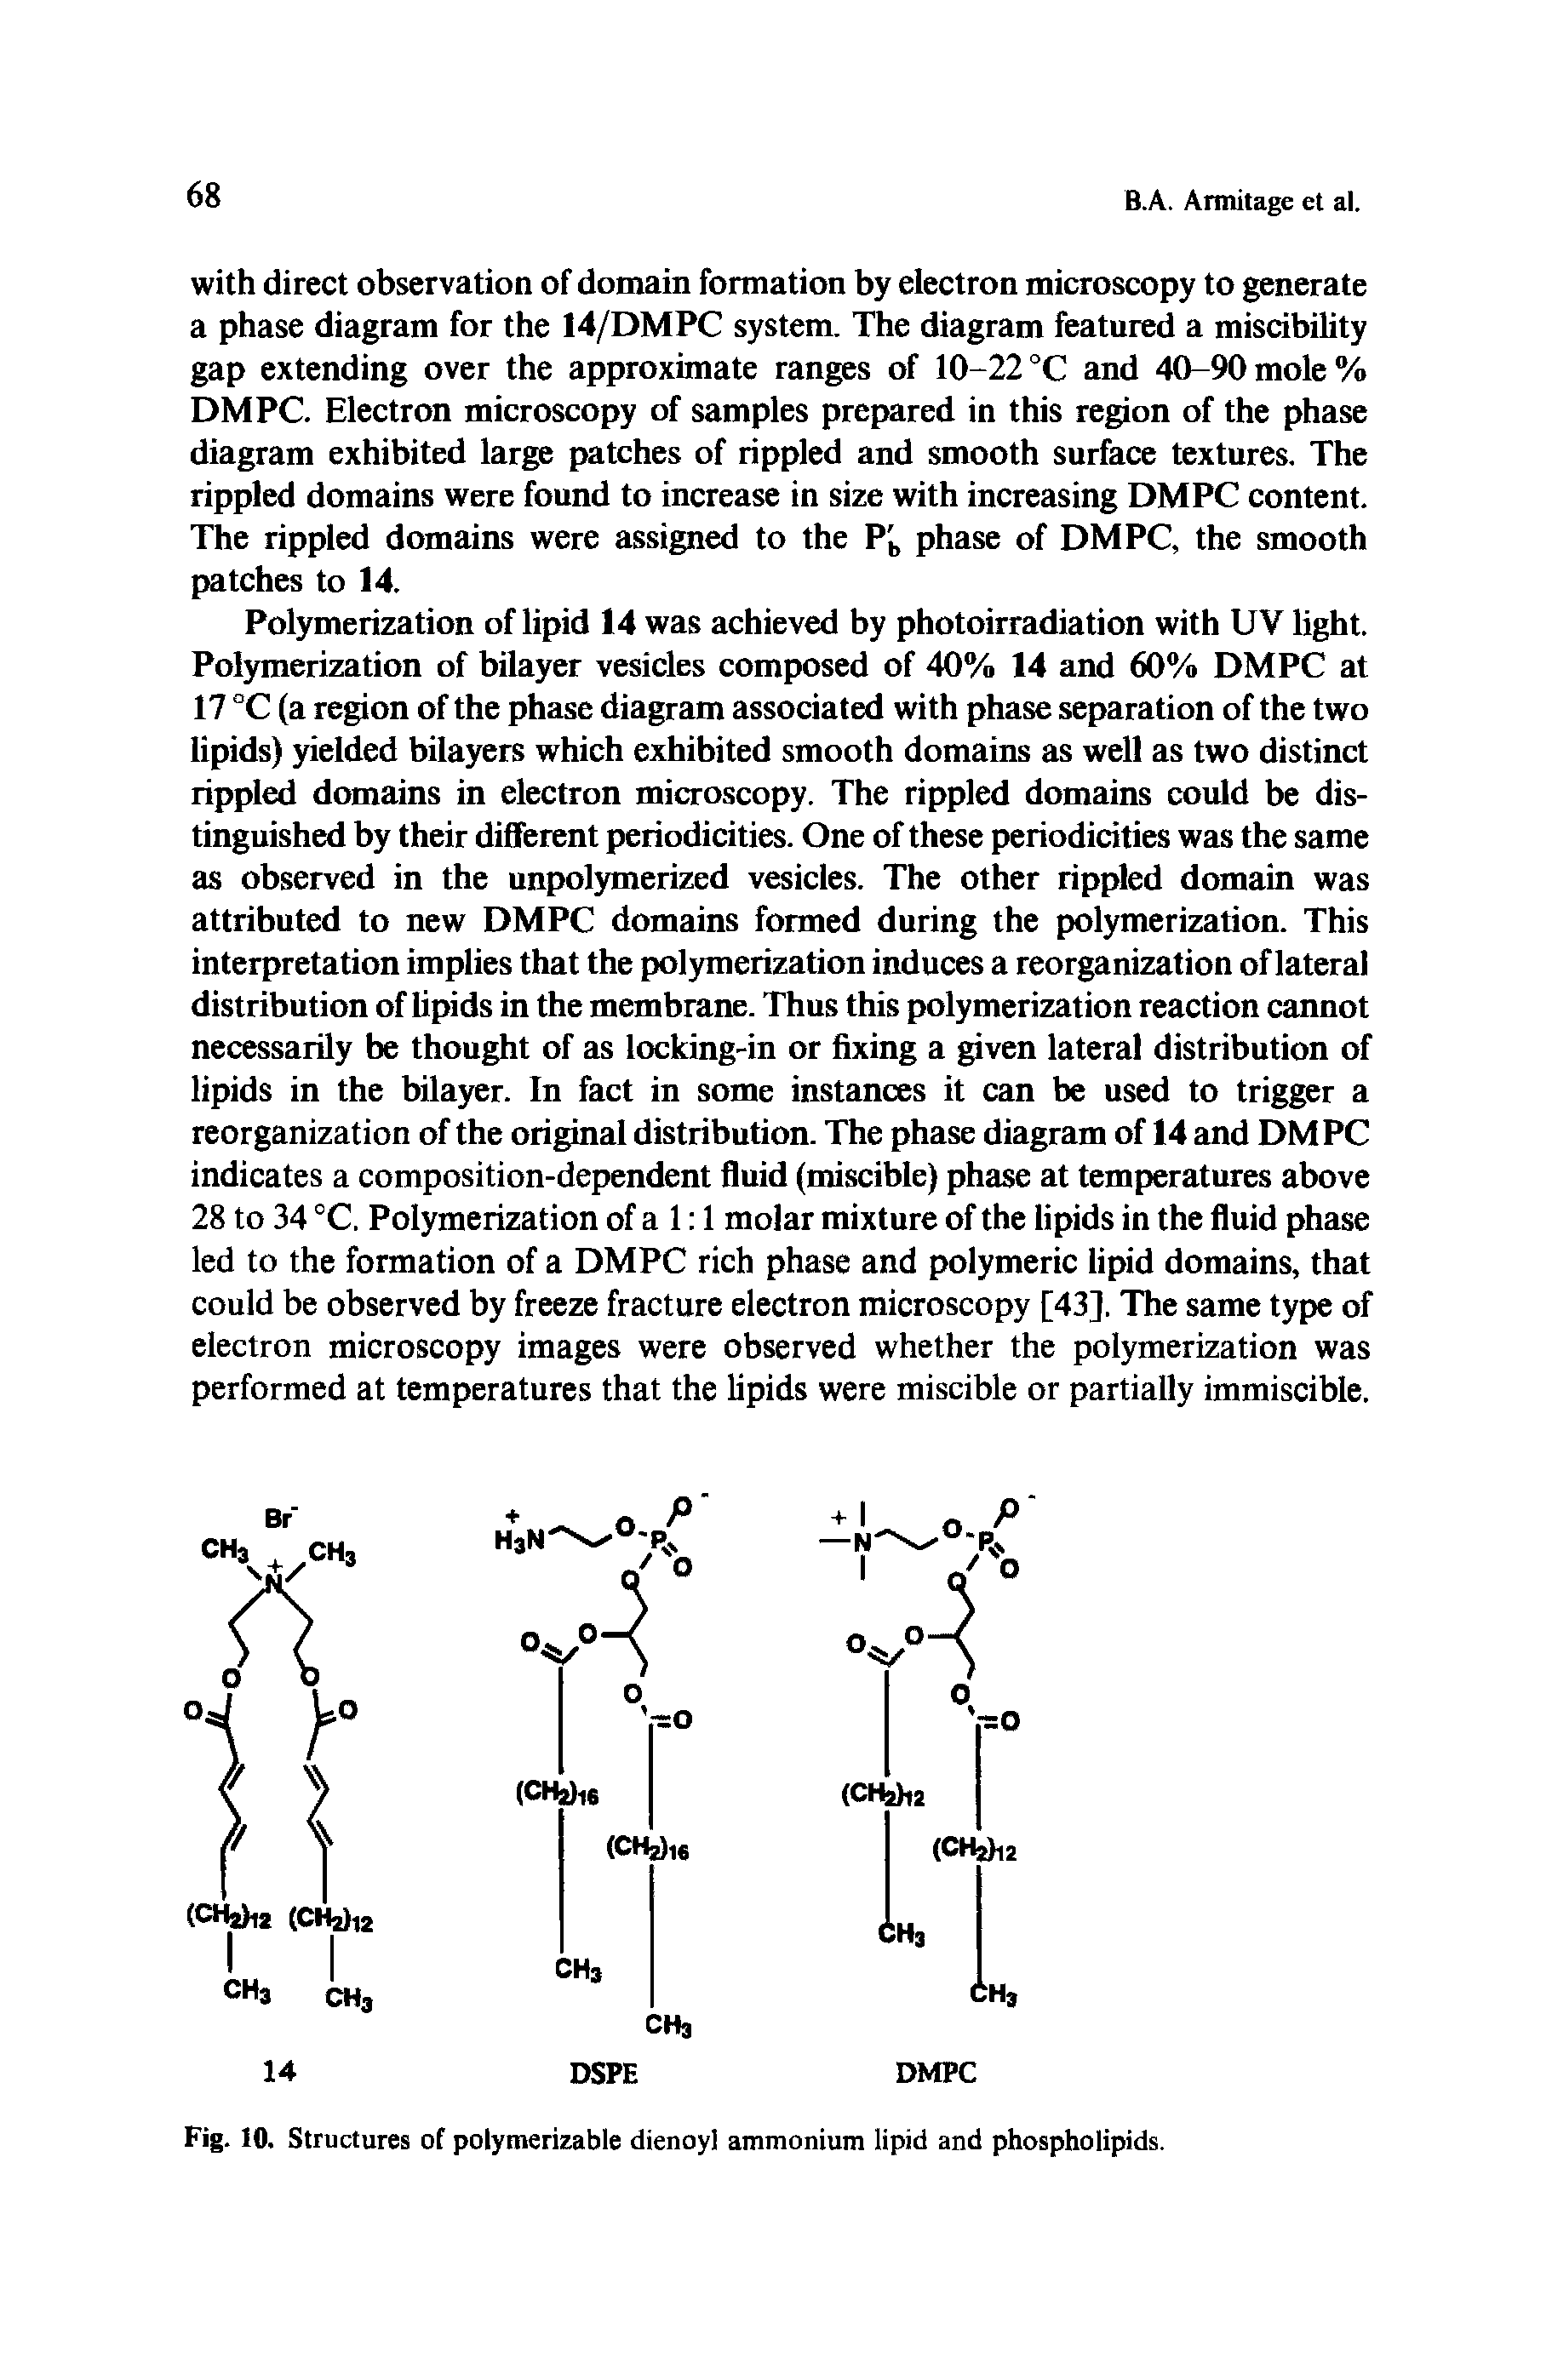 Fig. 10. Structures of polymerizable dienoyl ammonium lipid and phospholipids.